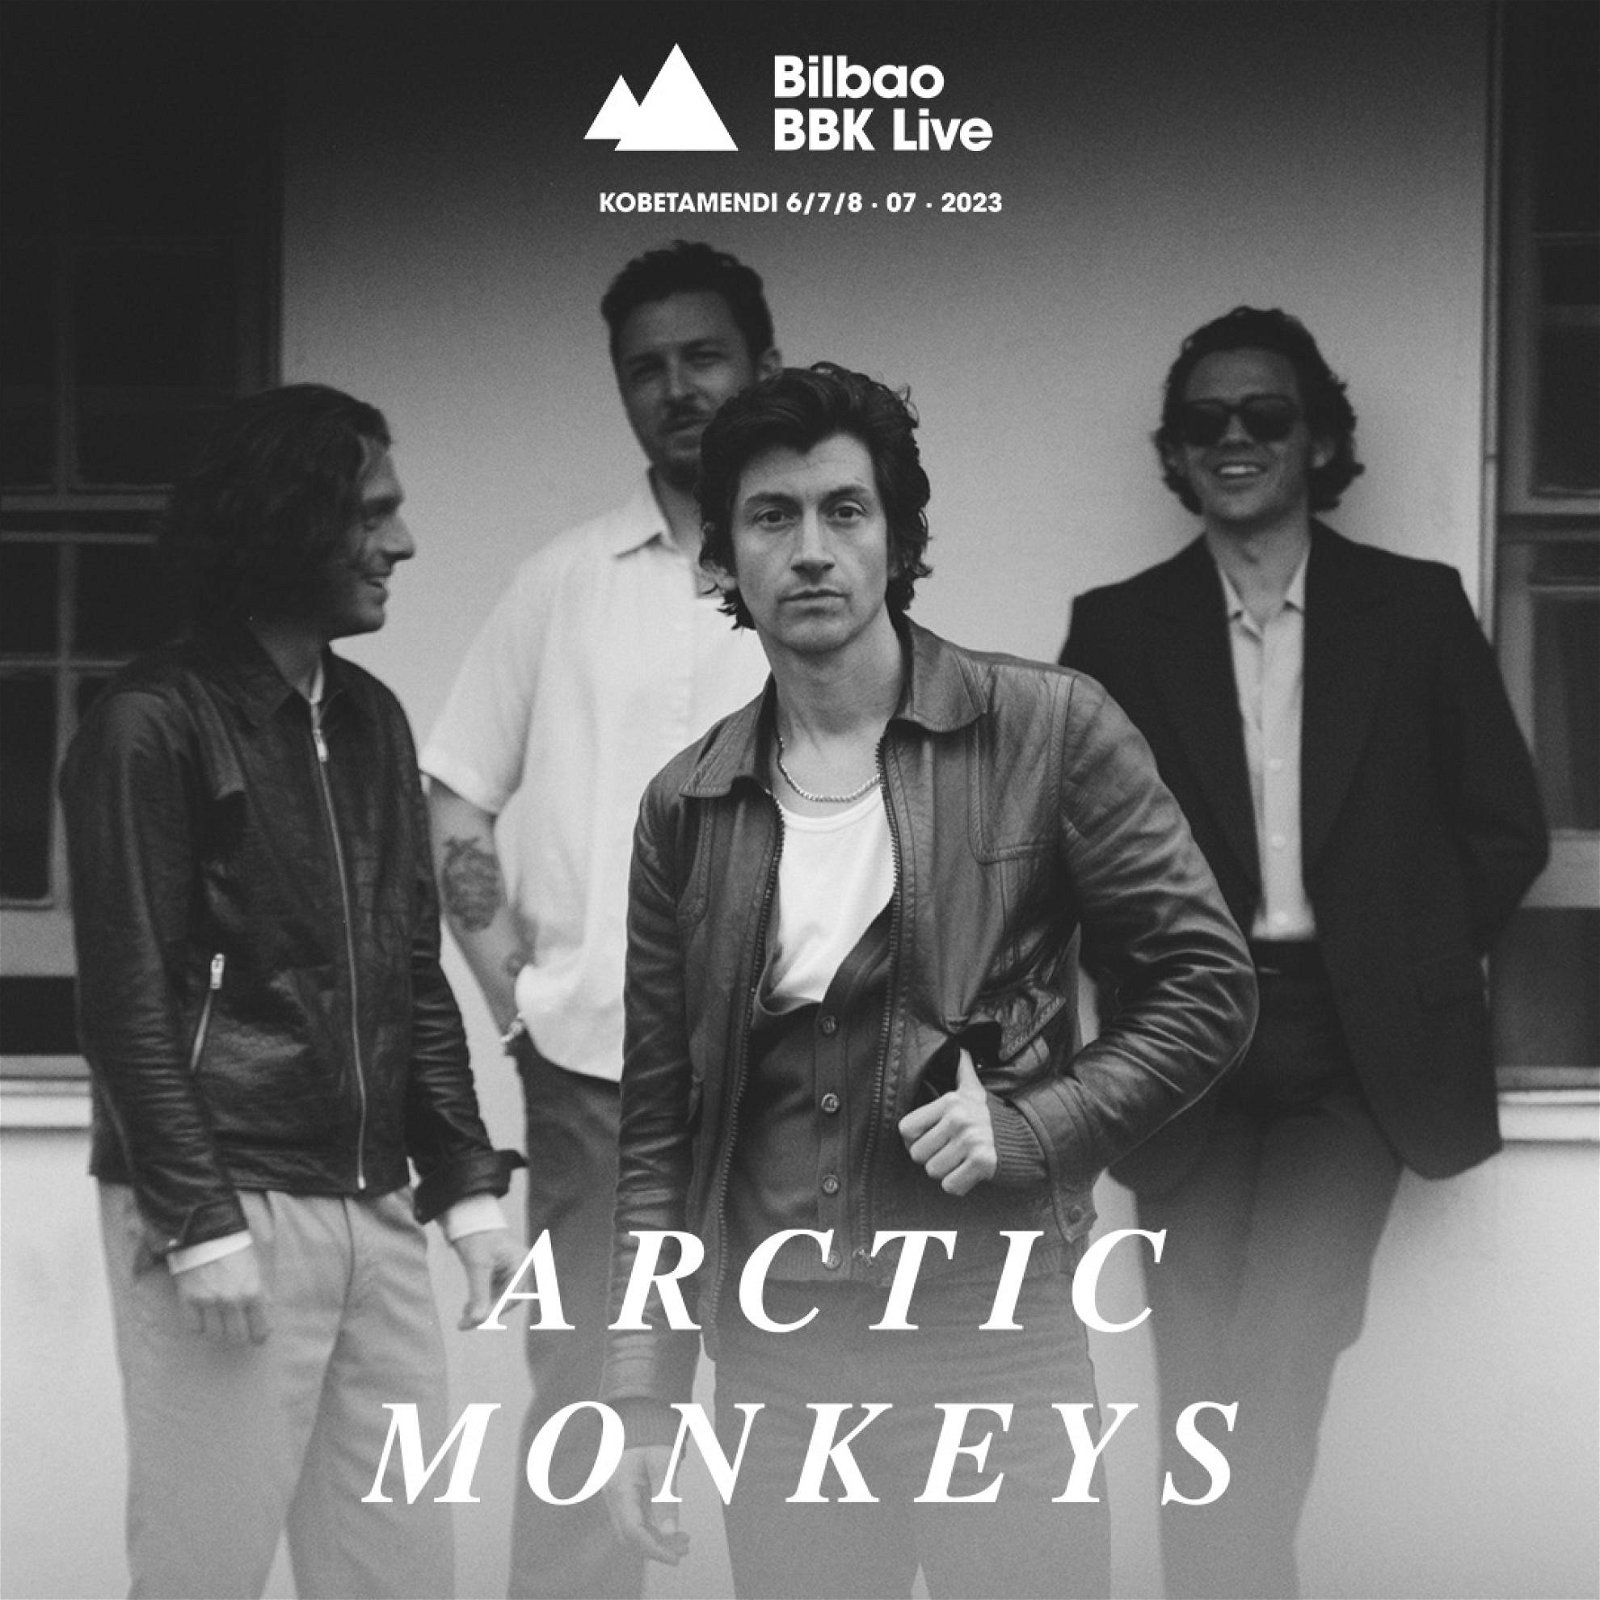 Arctic Monkeys, primer artista confirmado de Bilbao BBK Live 2023